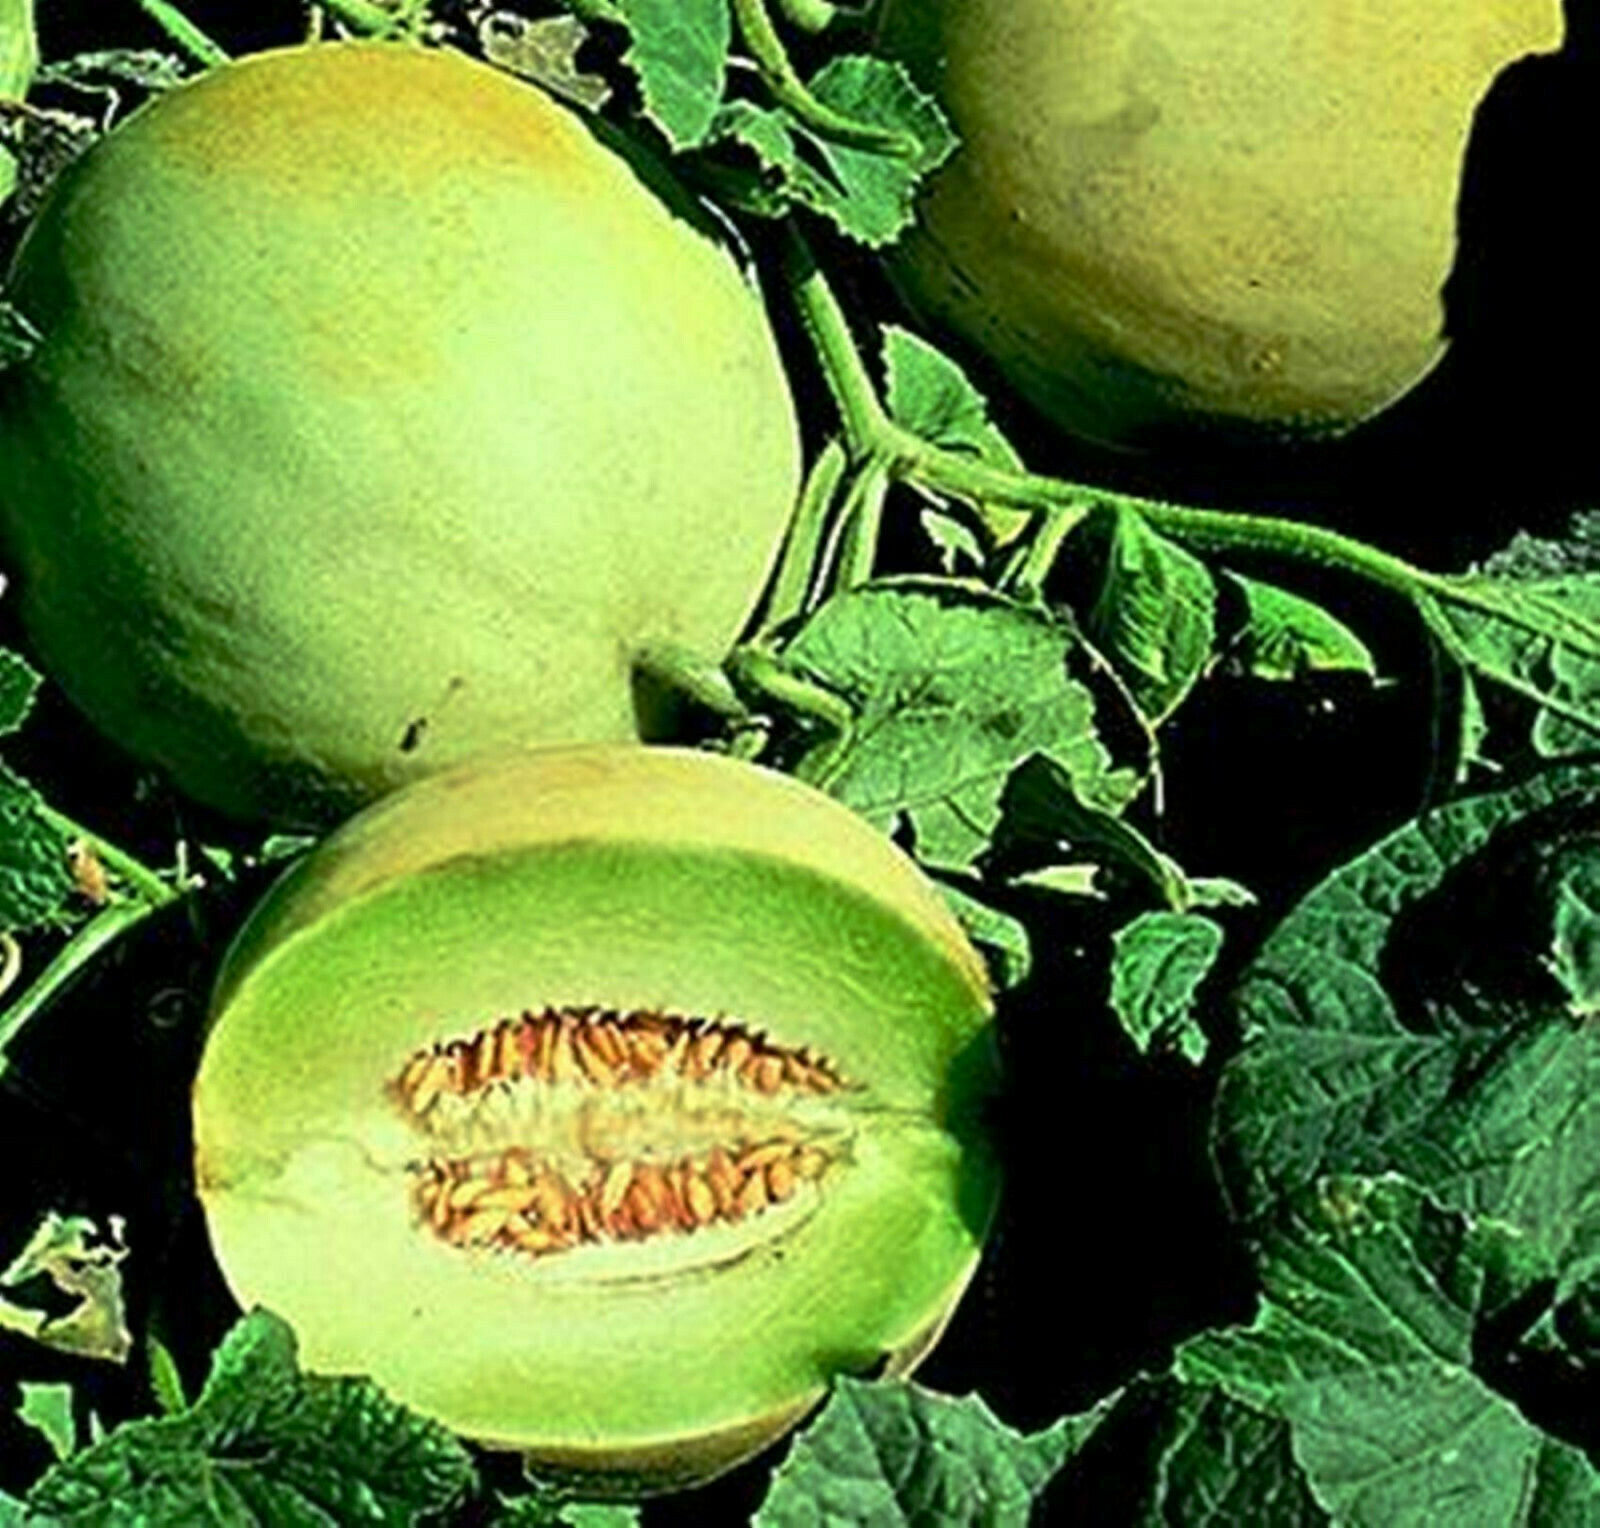 Jumbo Honeydew Melon Sweet Fruits -10 Seeds - White Antibes Cult